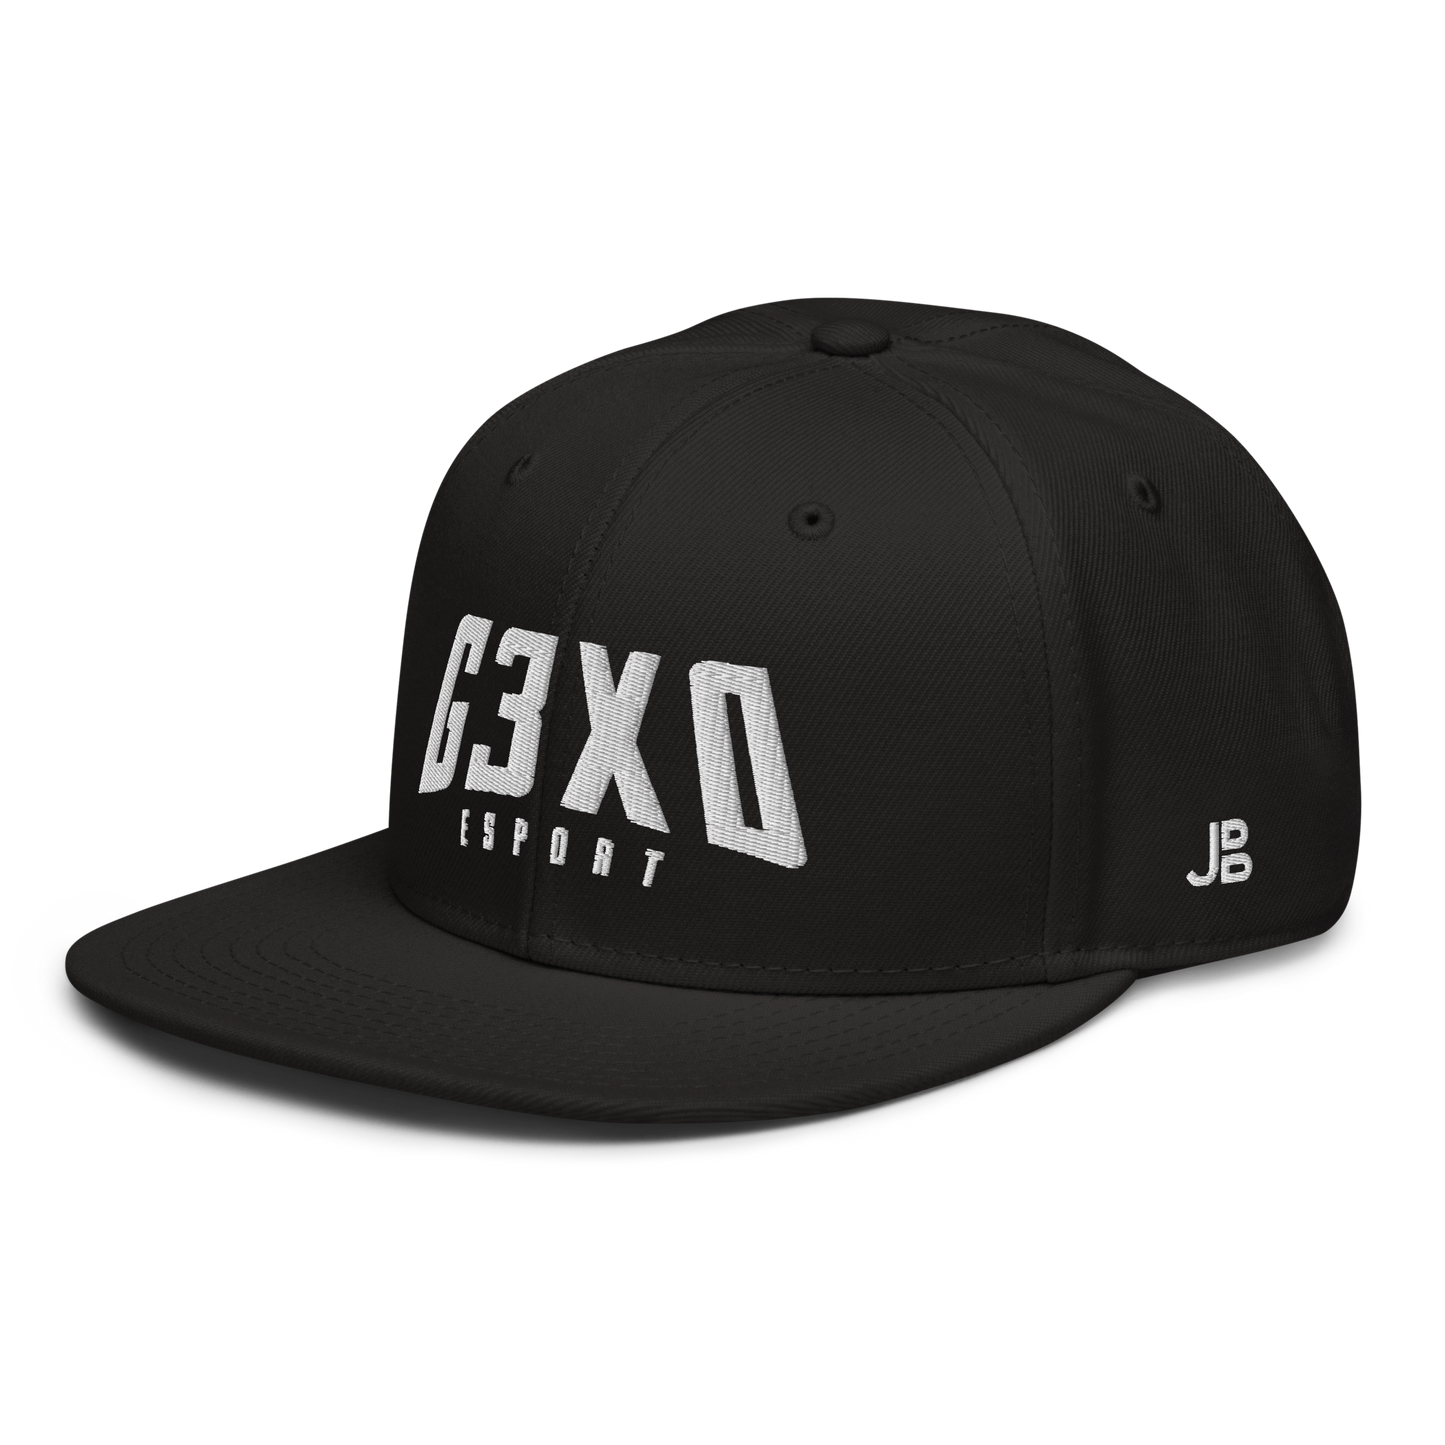 G3XO ESPORT - Snapback Cap